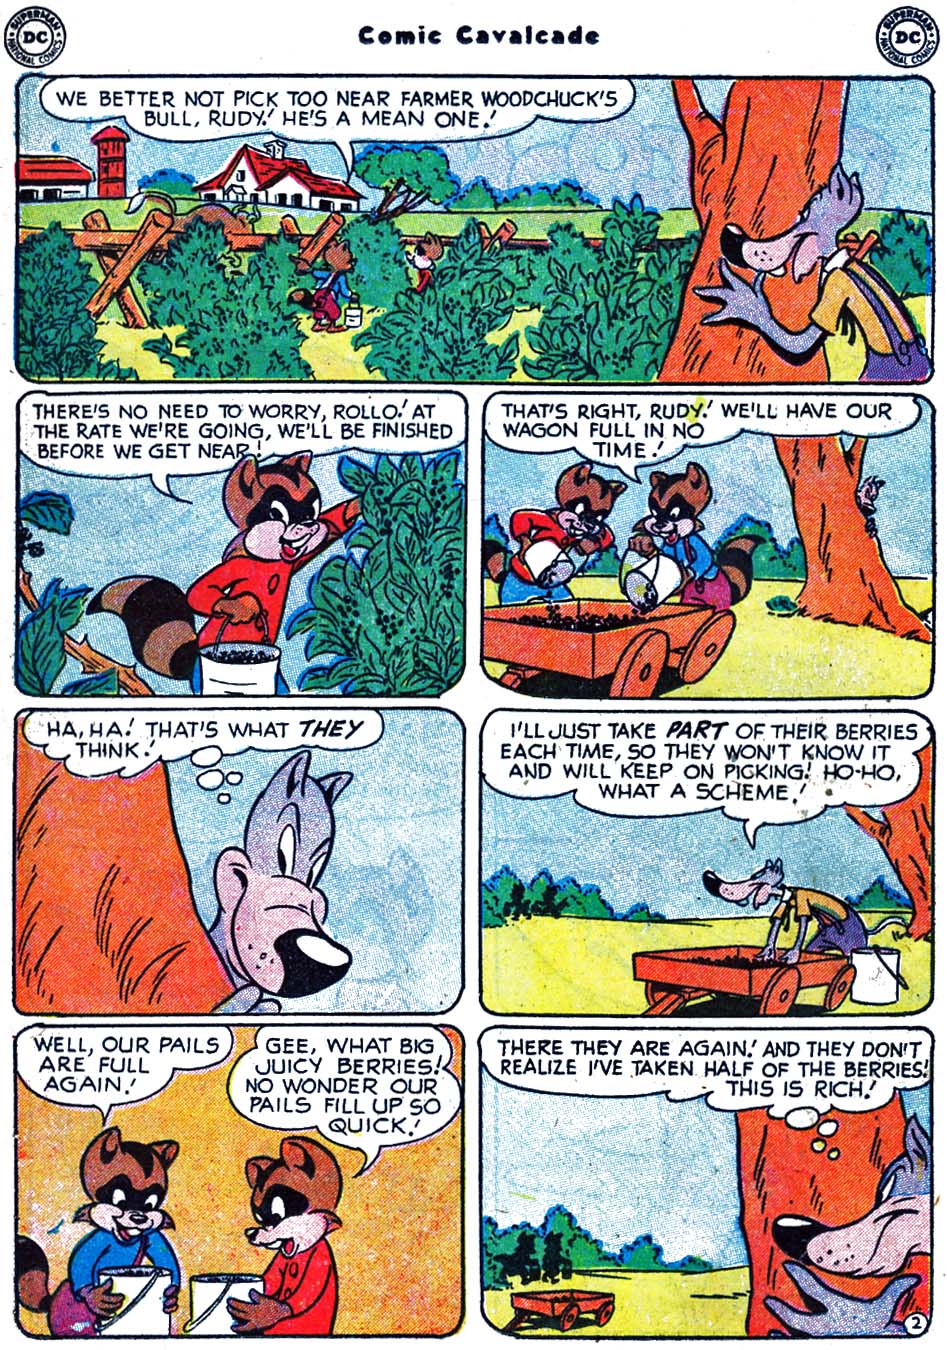 Comic Cavalcade issue 47 - Page 14